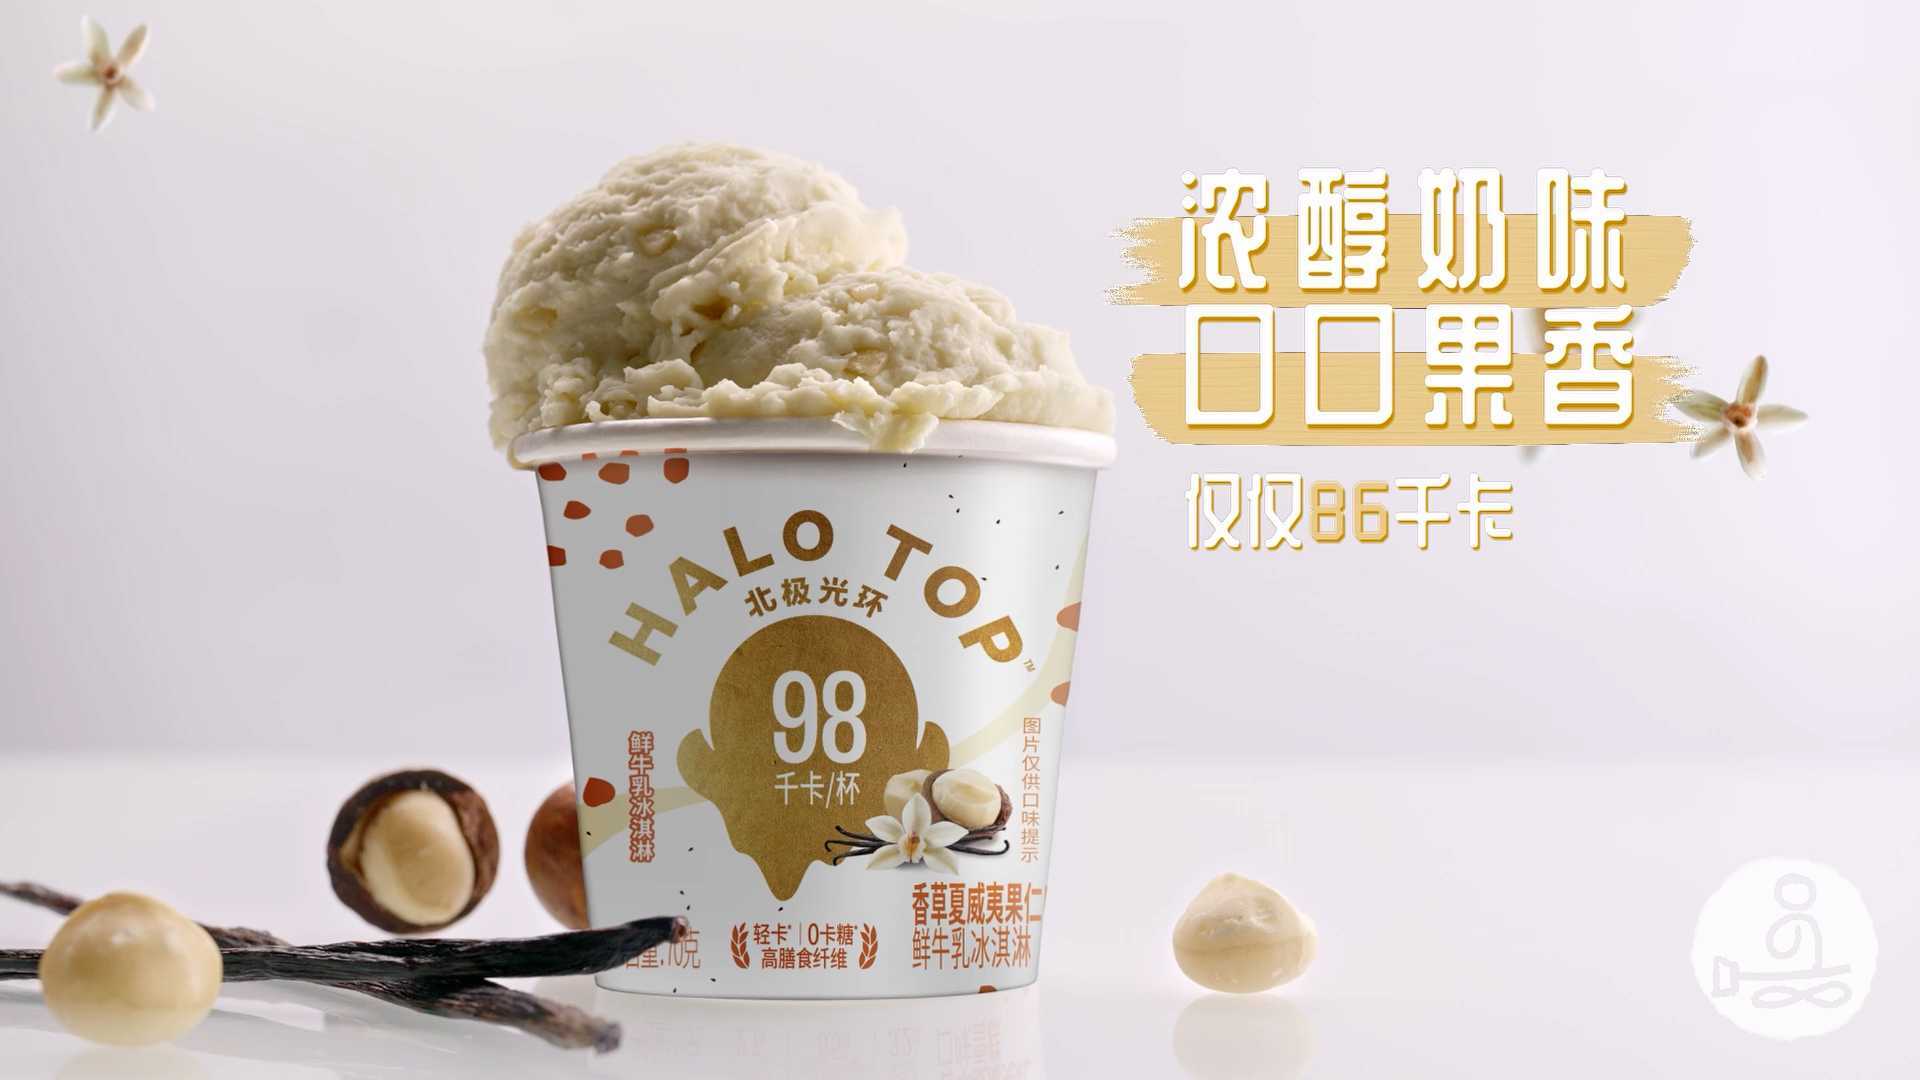 HaloTop北极光环香草夏威夷果口味轻卡低脂冰淇淋雪糕